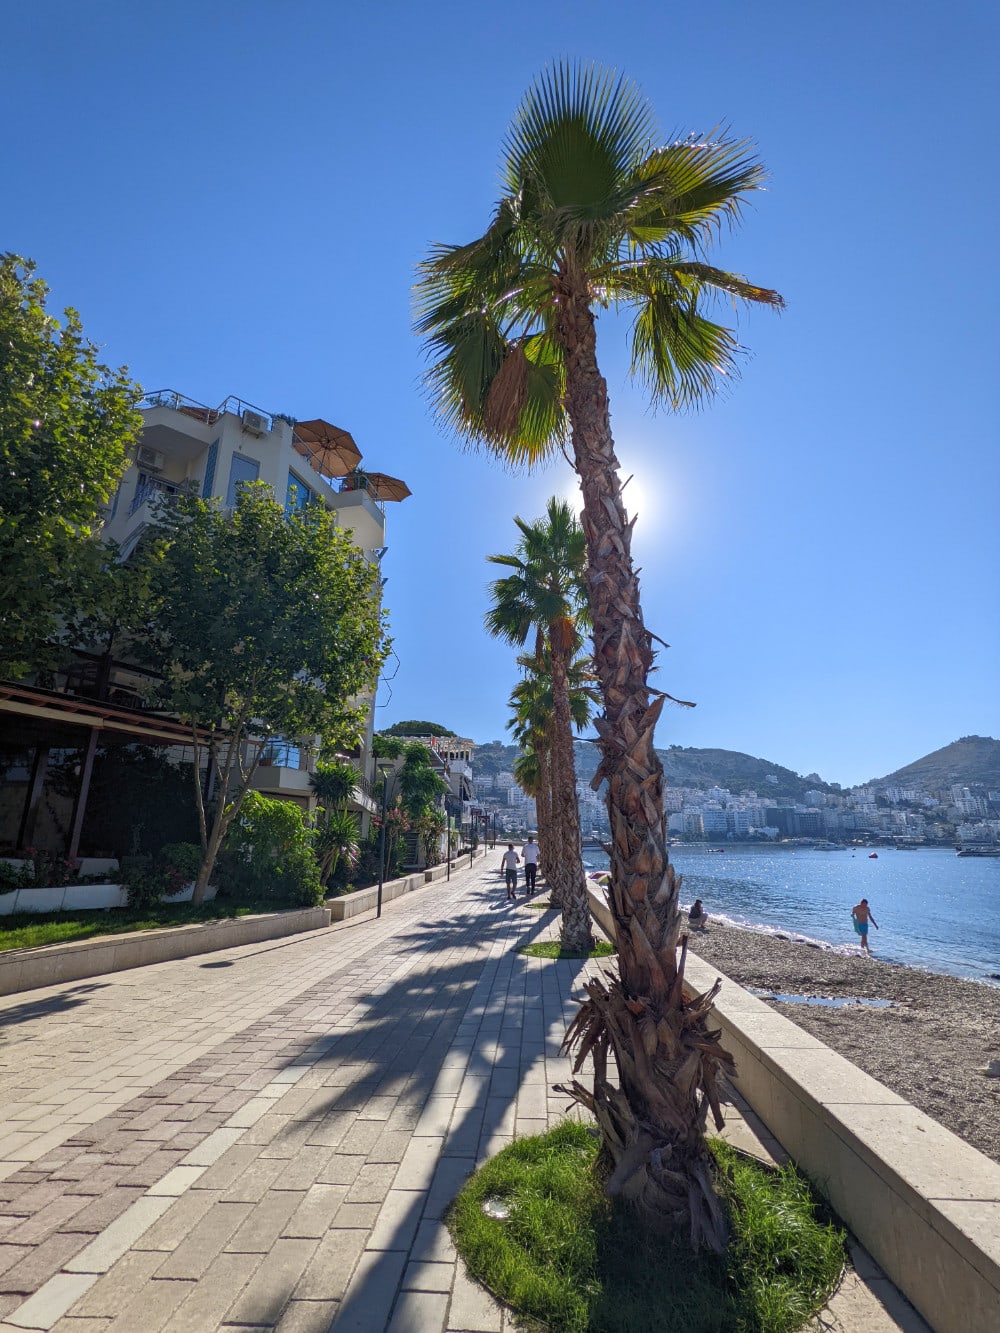 saranda waterfront with palm trees